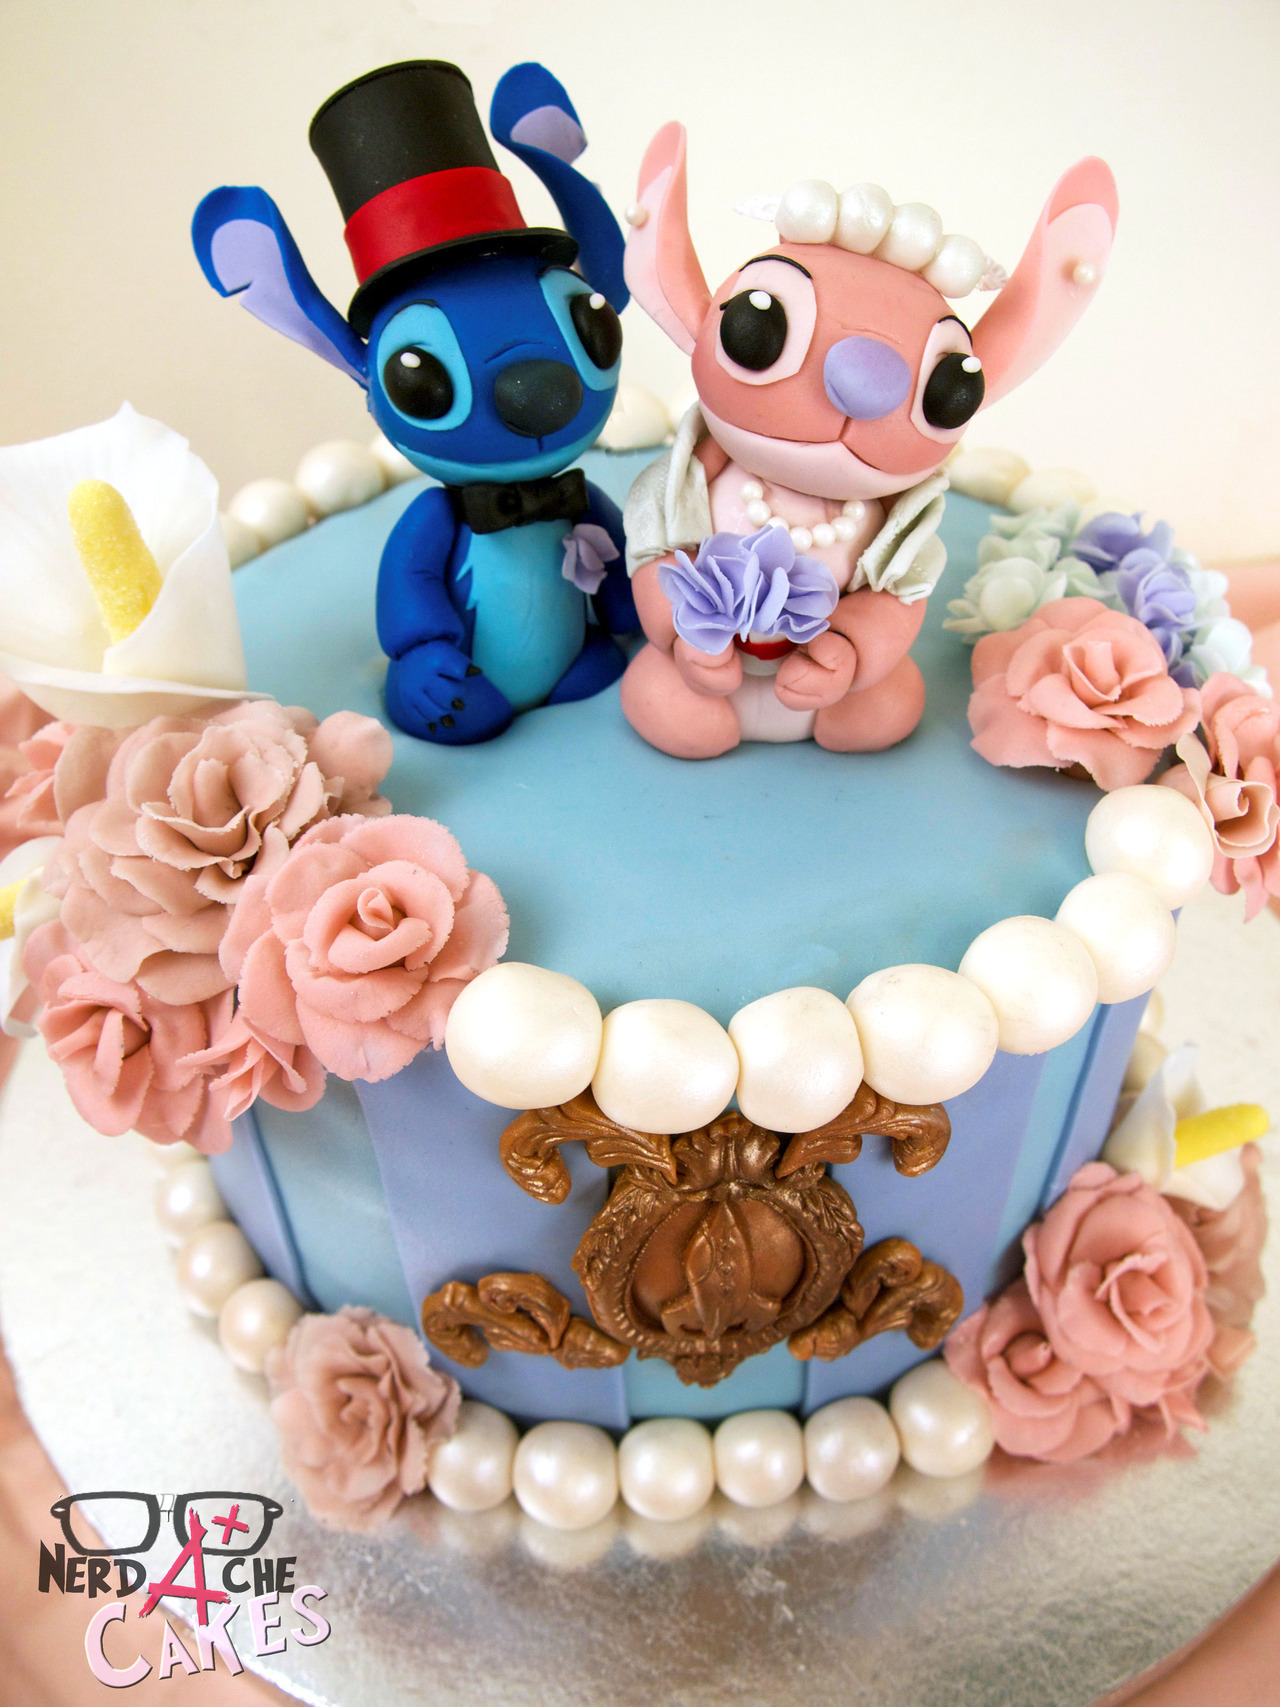 nerdache-cakes:  A Stitch and Angel wedding cake! The bride wanted something elegant-